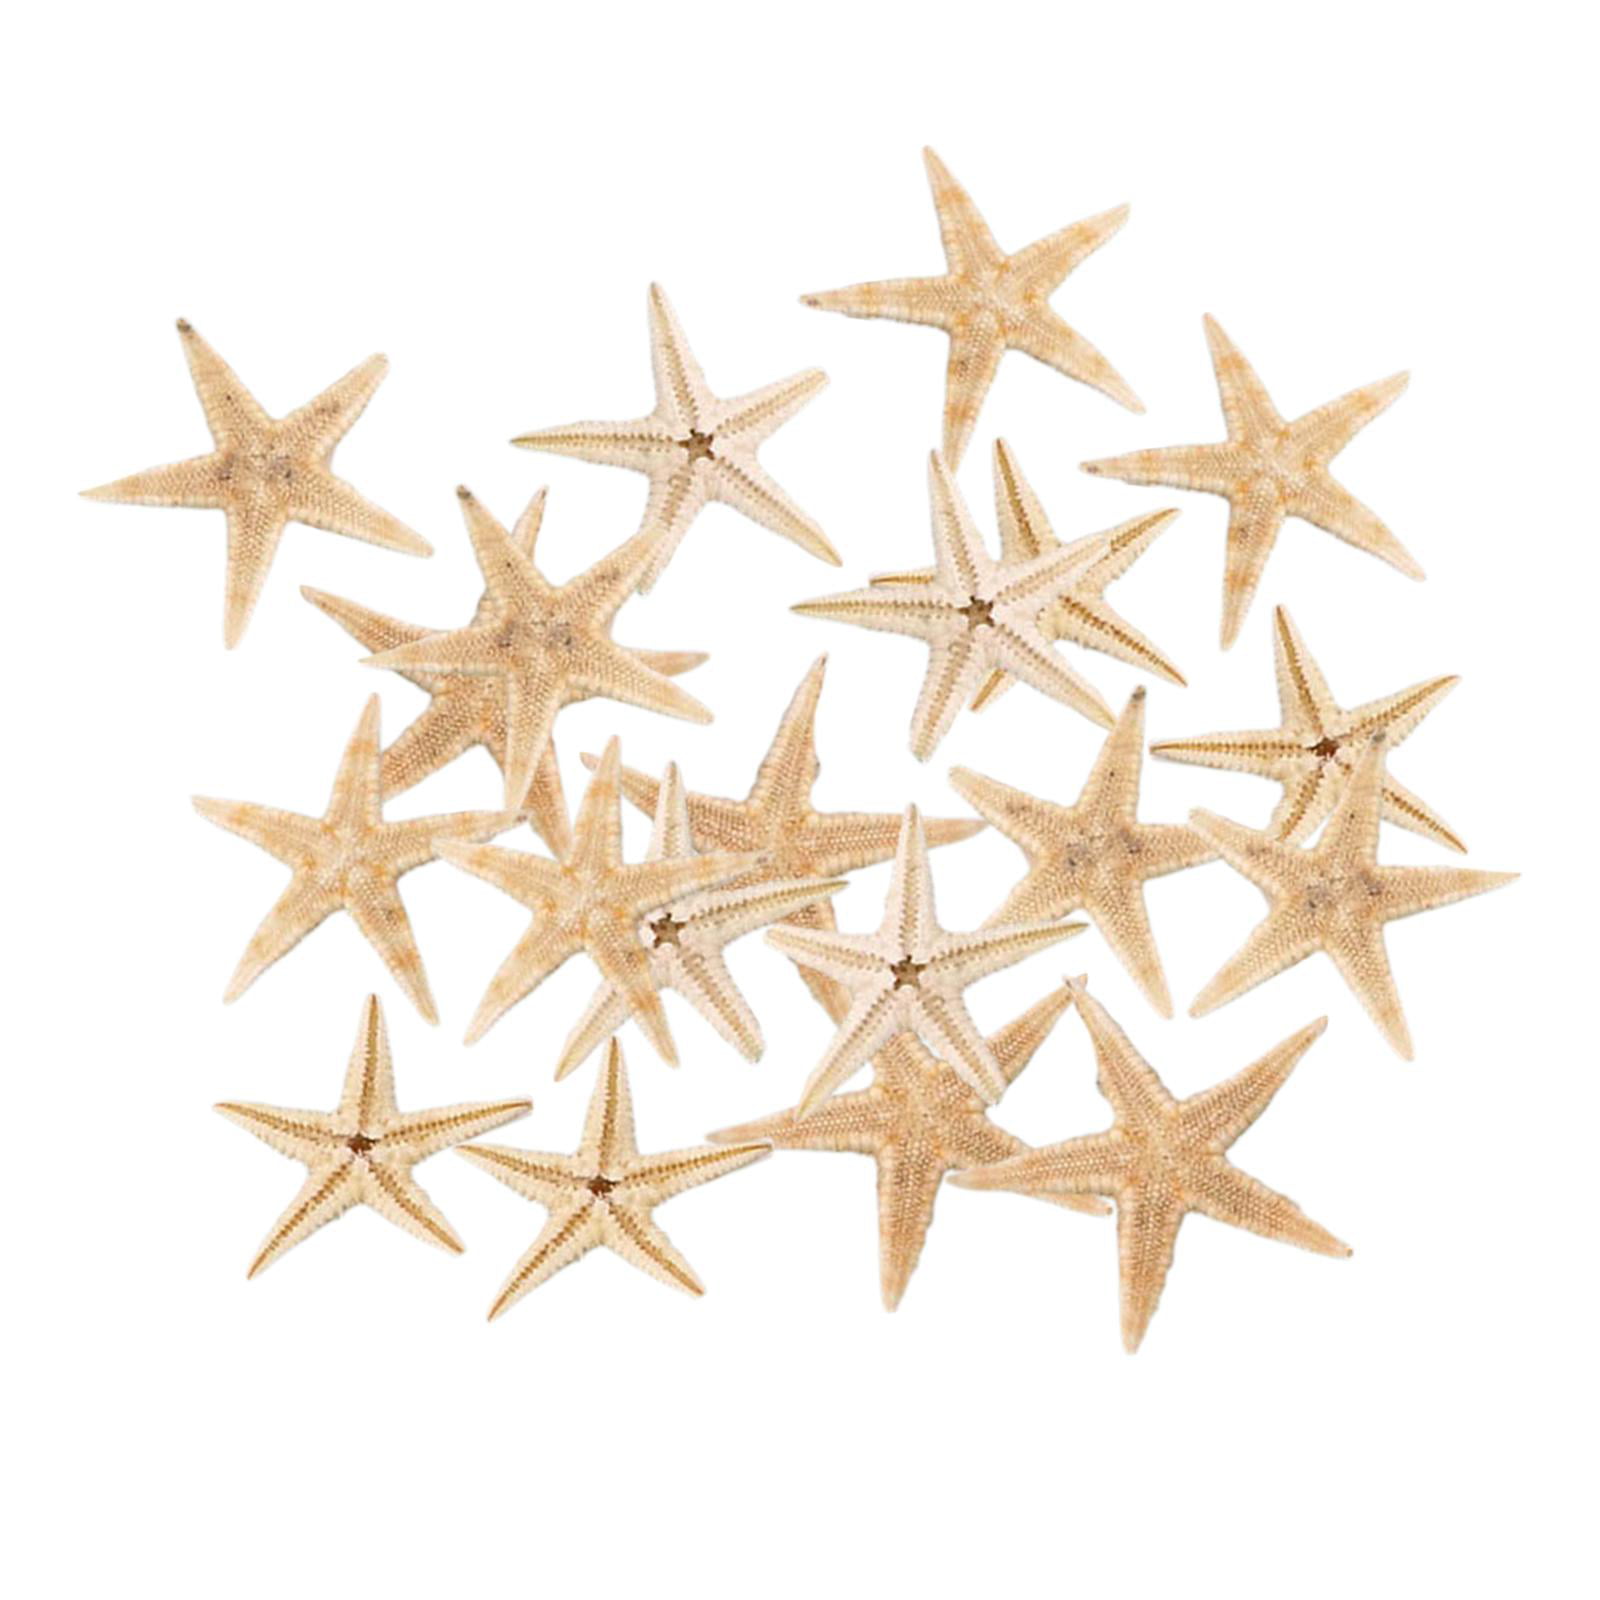 100pcs Sea Star Shell Starfish Craft Beach Mini Decor Miniature DIY 6A 